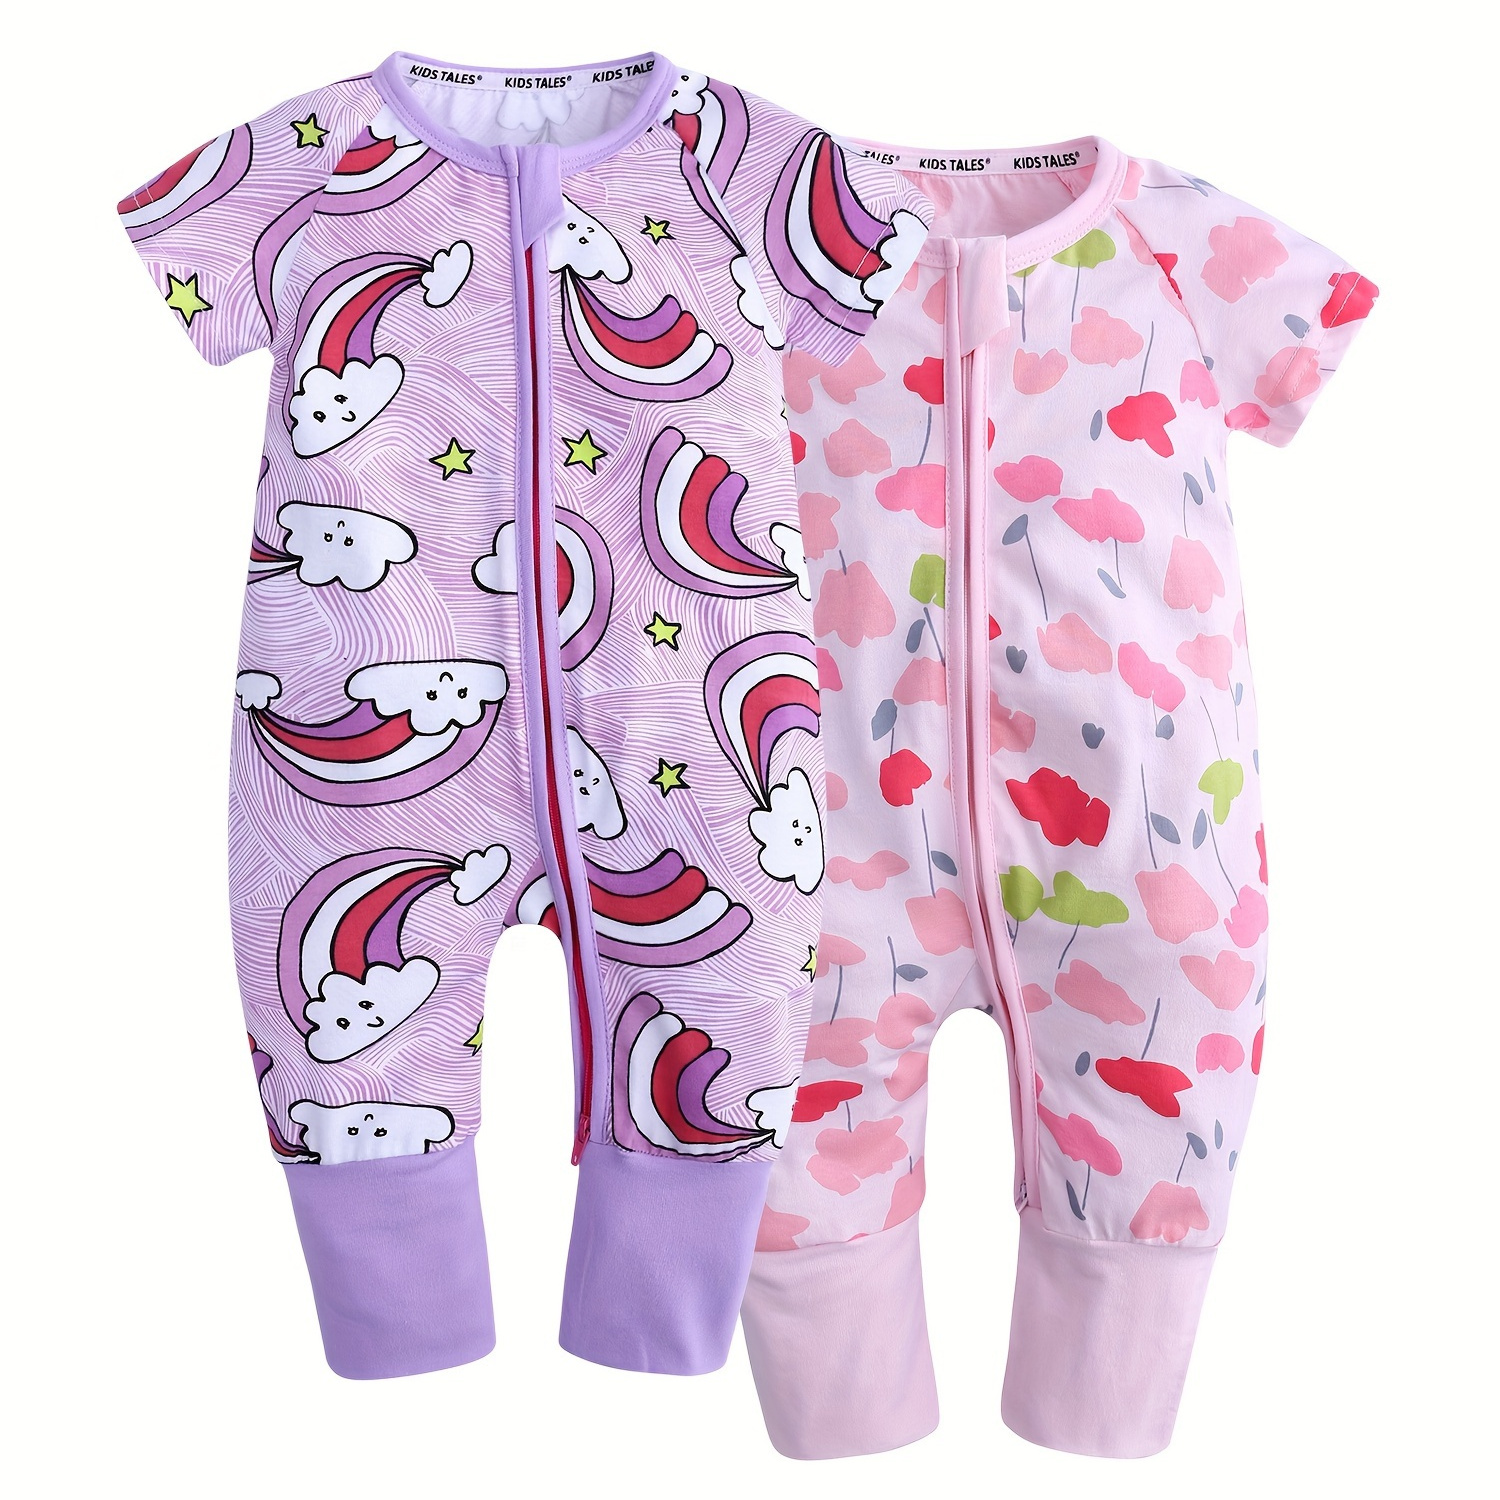 

2-pack Baby Infant Zipper Romper Toddler Boys Girls Short Sleeve Cotton Playsuit Flower Printed 2 Way Zip Bodysuit